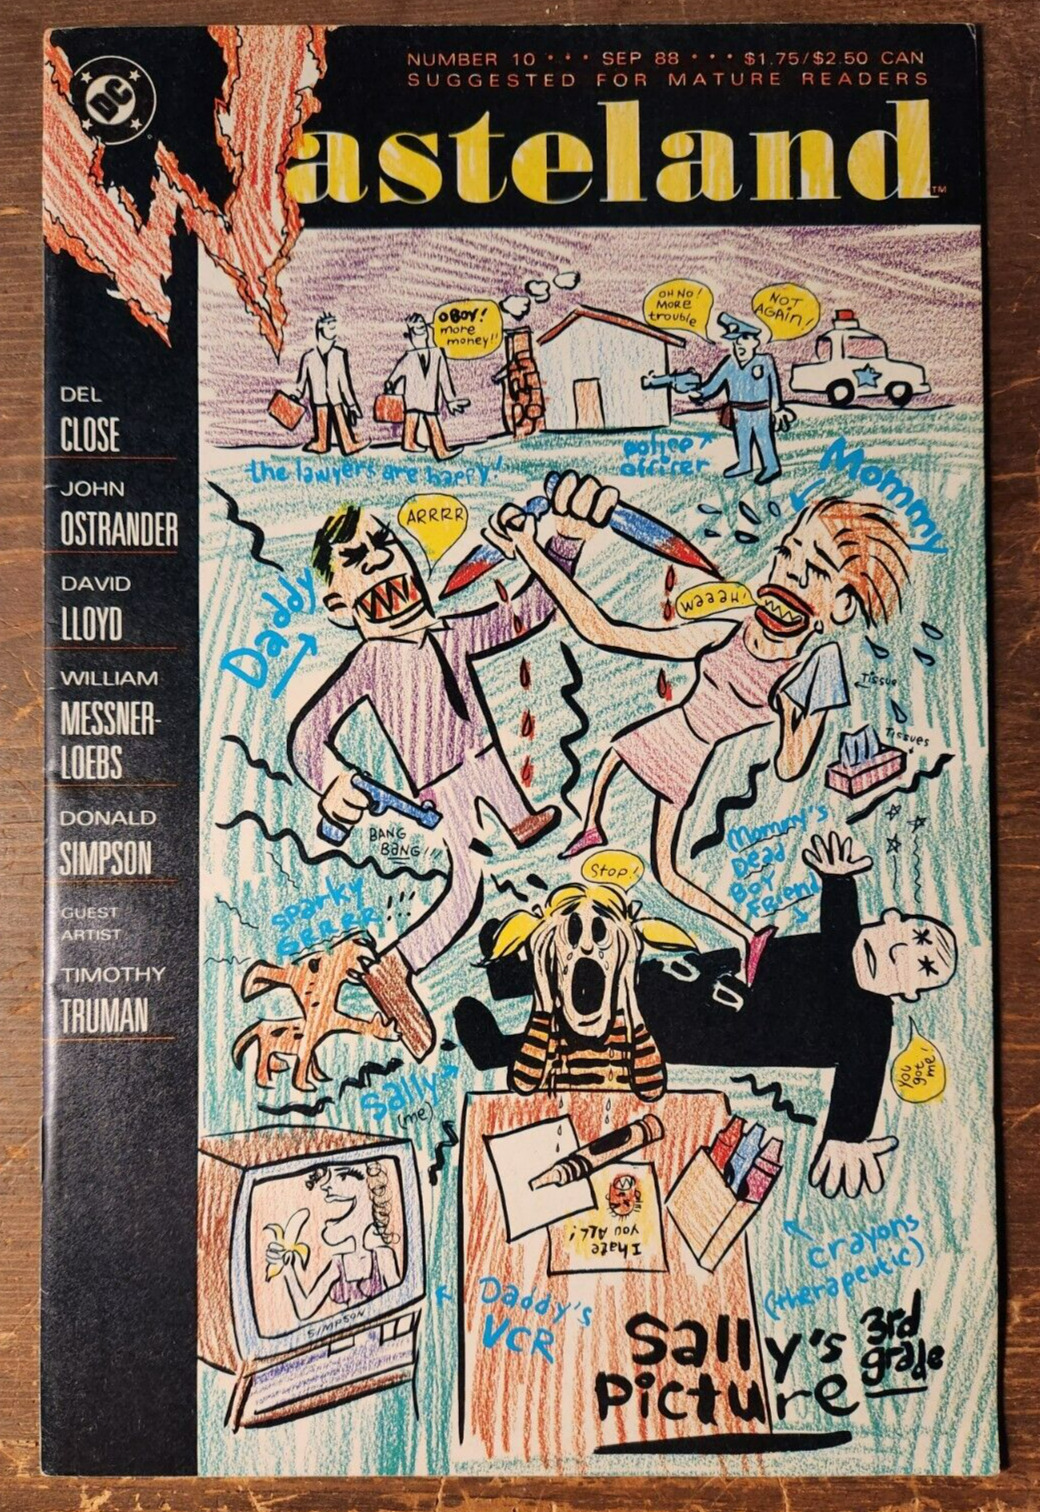 WASTELAND #10 - DC COMICS - SEPT. 1988 - High Grade/Near Mint CHECK IT OUT